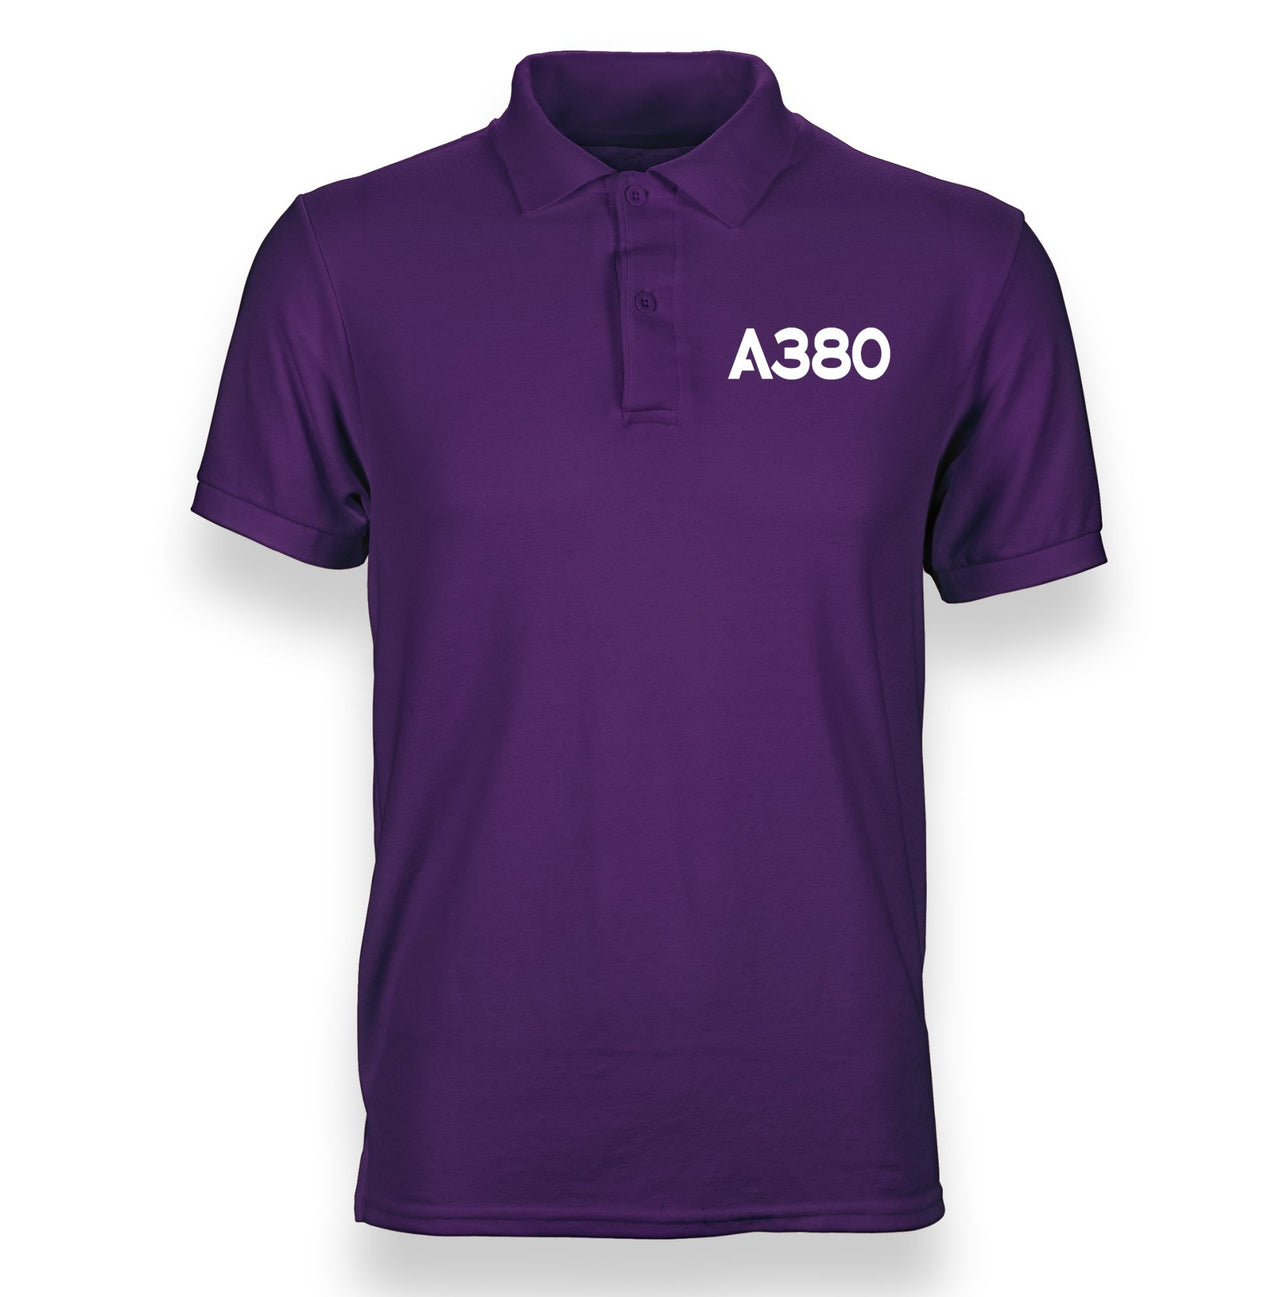 A380 Flat Text Designed "WOMEN" Polo T-Shirts